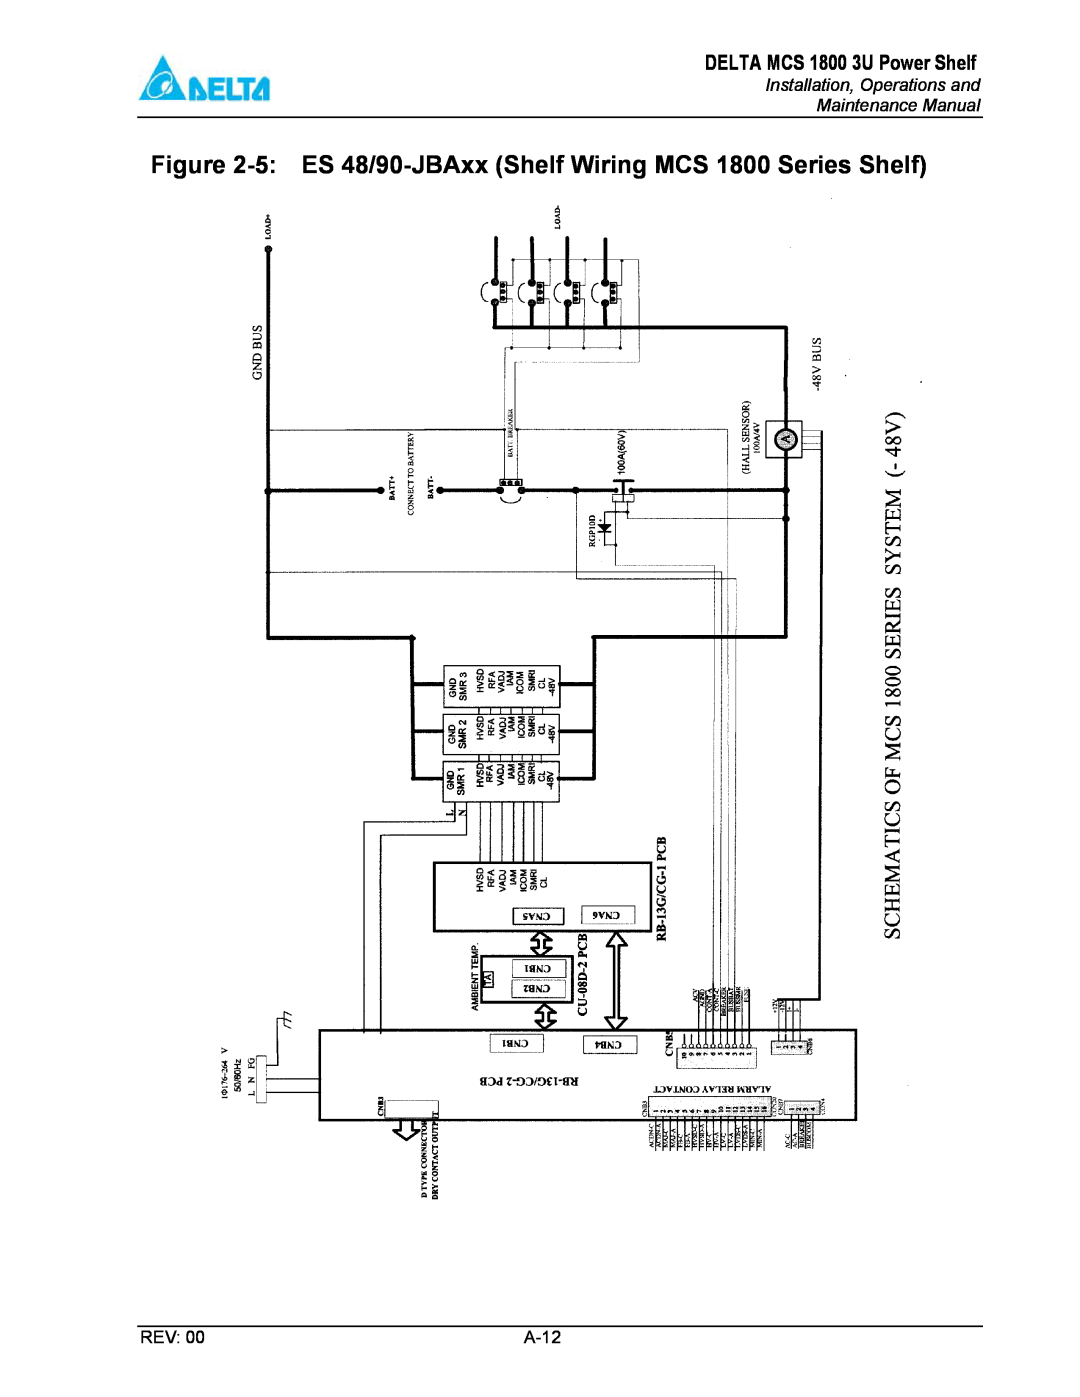 Delta MCS-1800 manual 5 ES 48/90-JBAxx Shelf Wiring MCS 1800 Series Shelf, DELTA MCS 1800 3U Power Shelf, A-12 